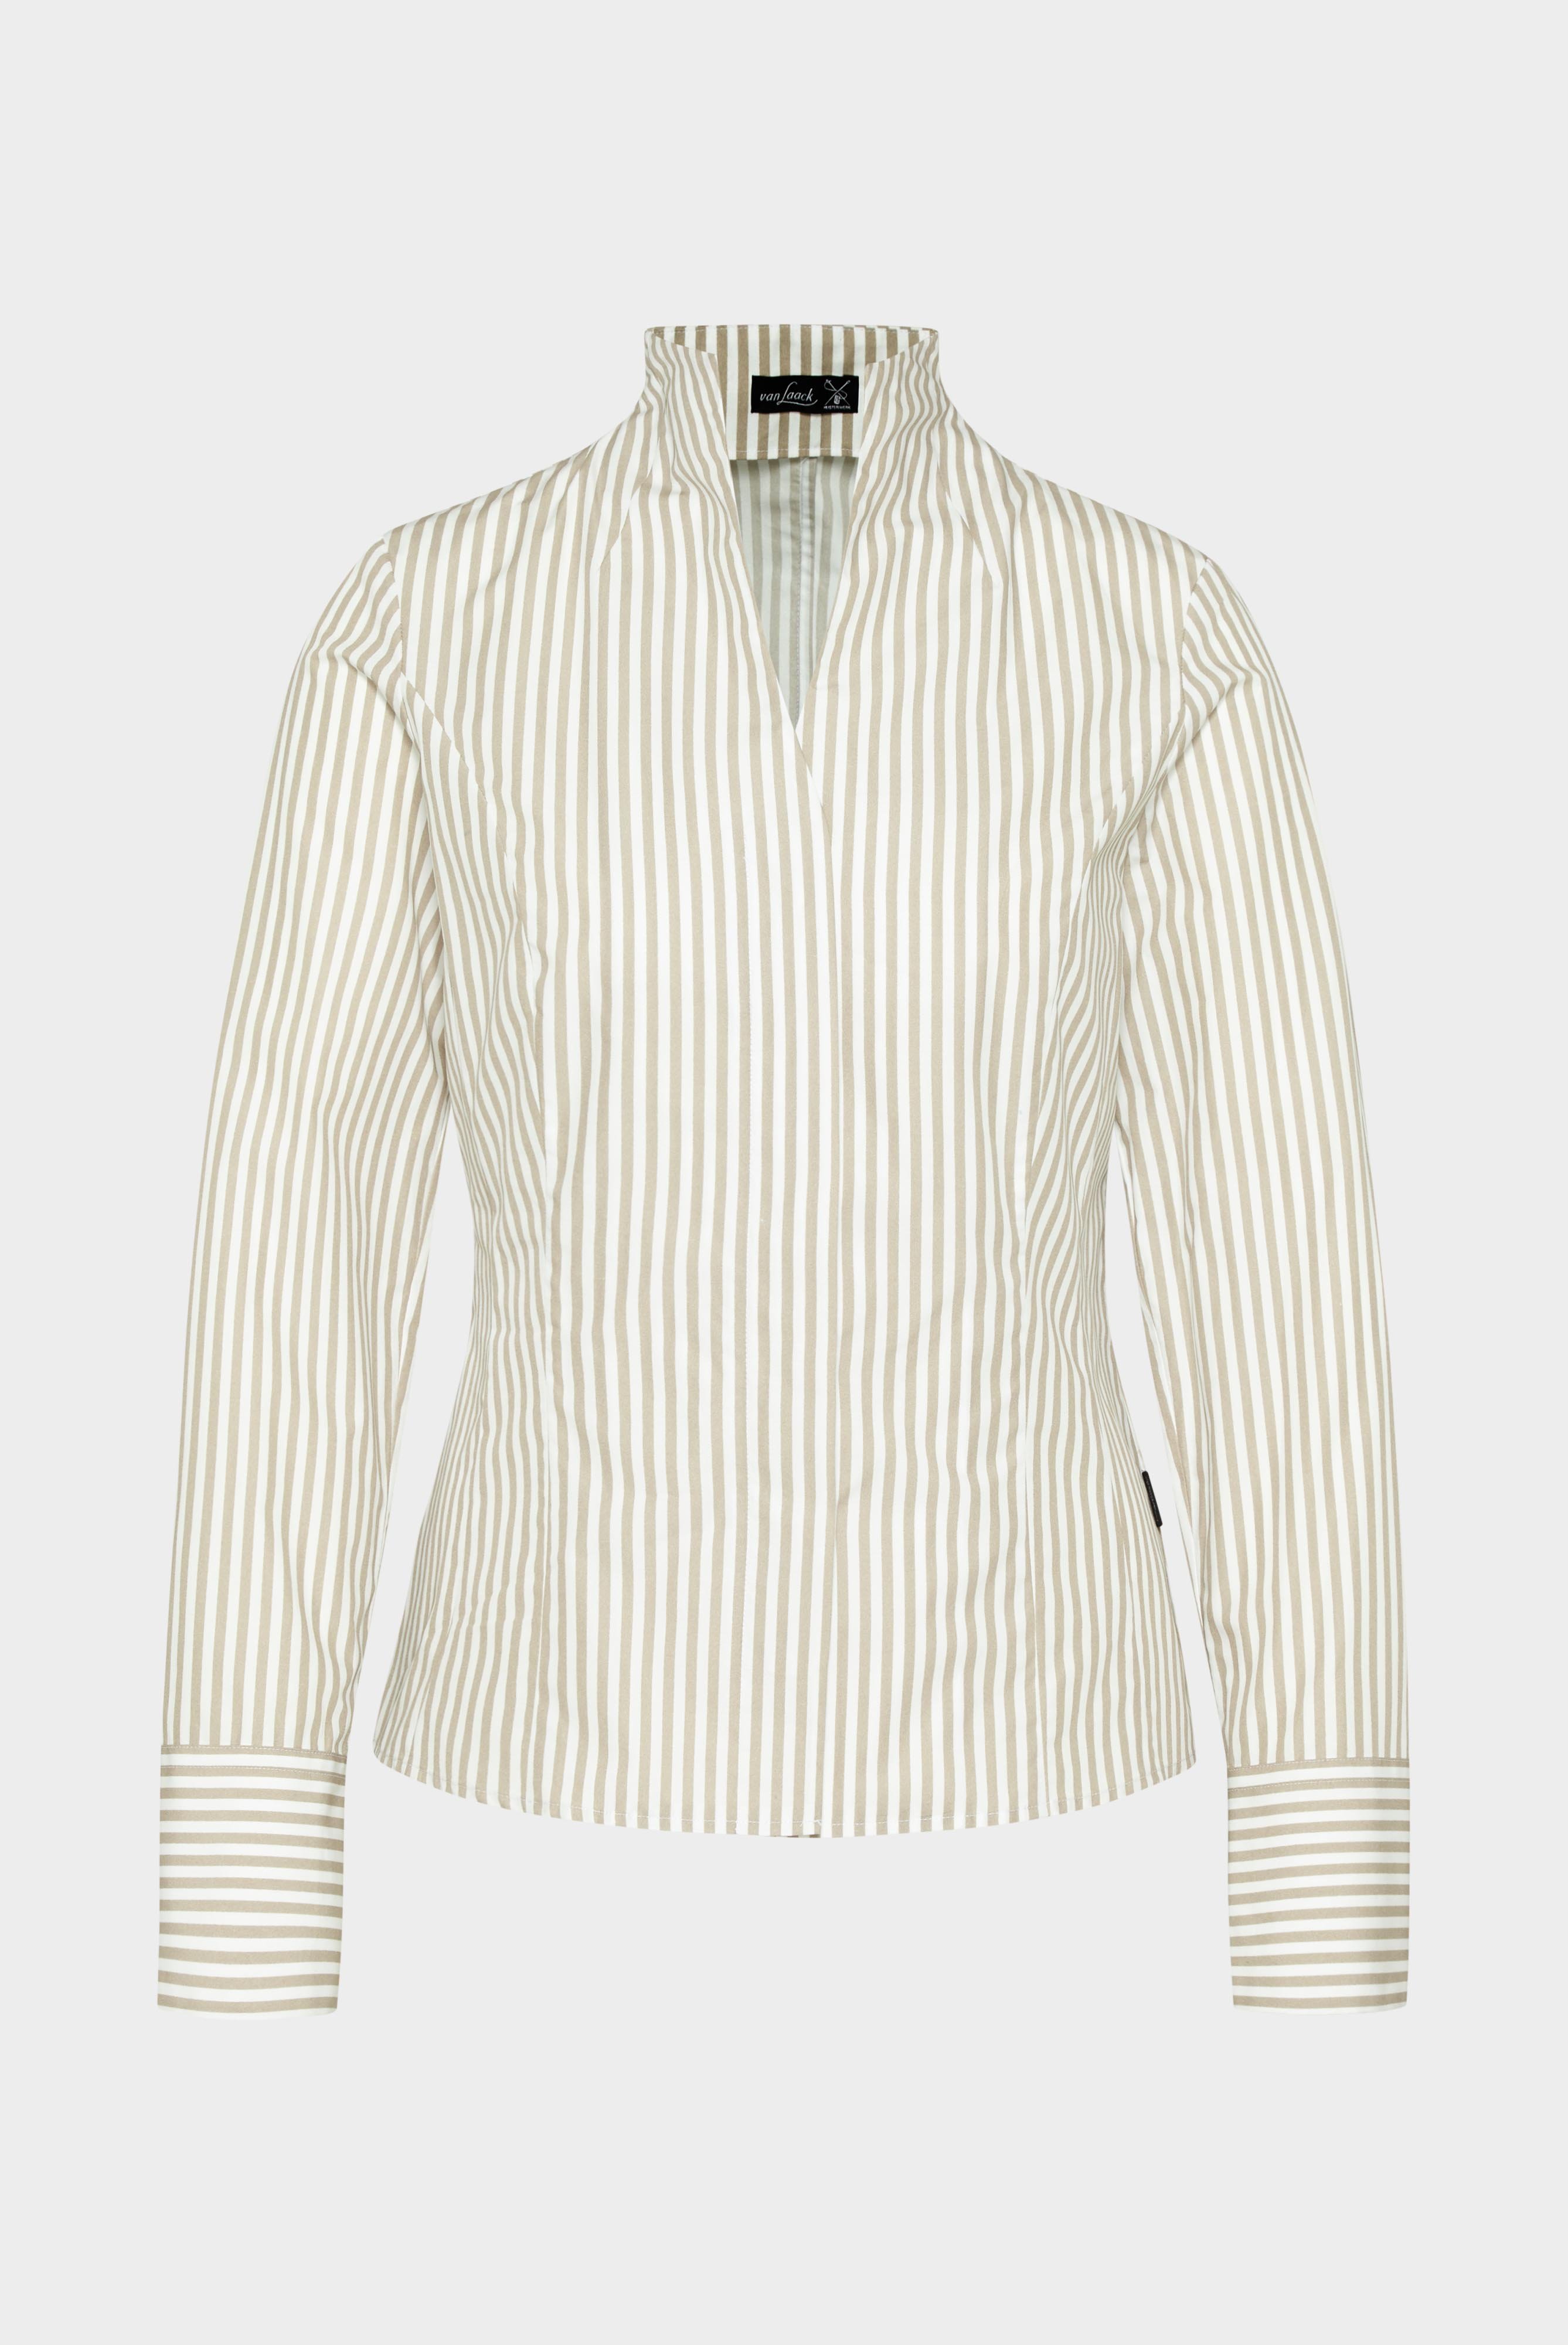 Business Blouses+Poplin chalice collar blouse beige striped+05.3612.FJ.170275.120.32